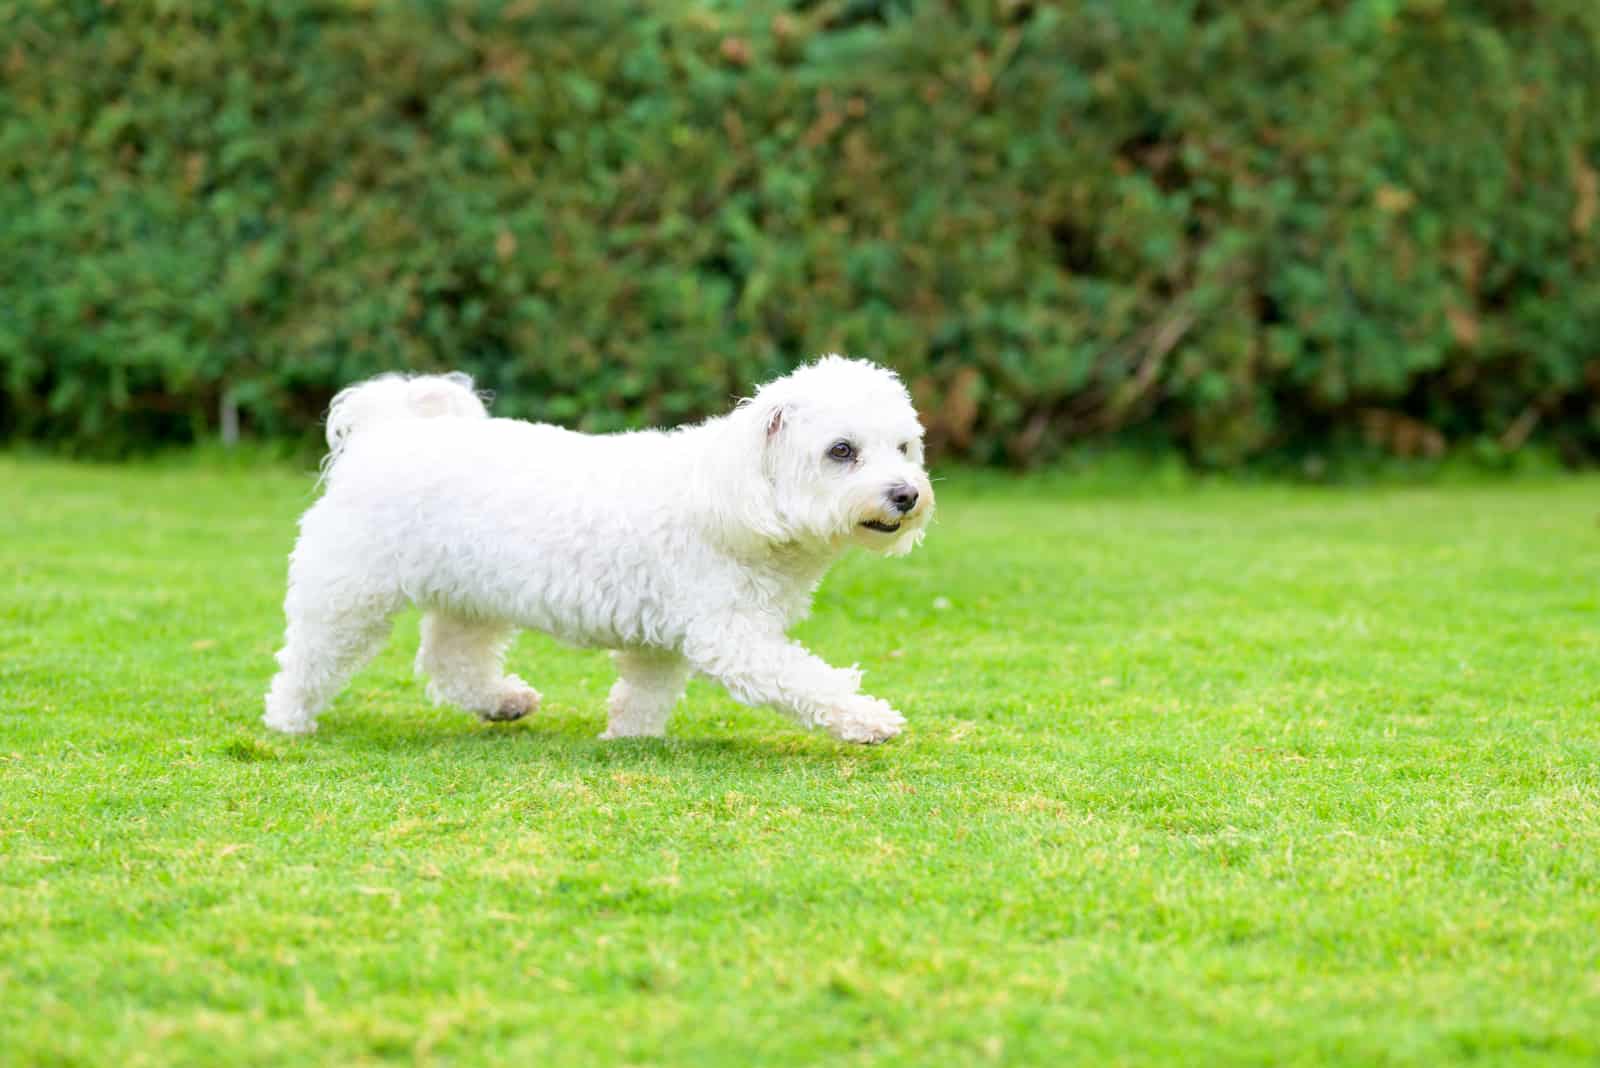 Little white Havanese dog enjoying playing in a lush green garden